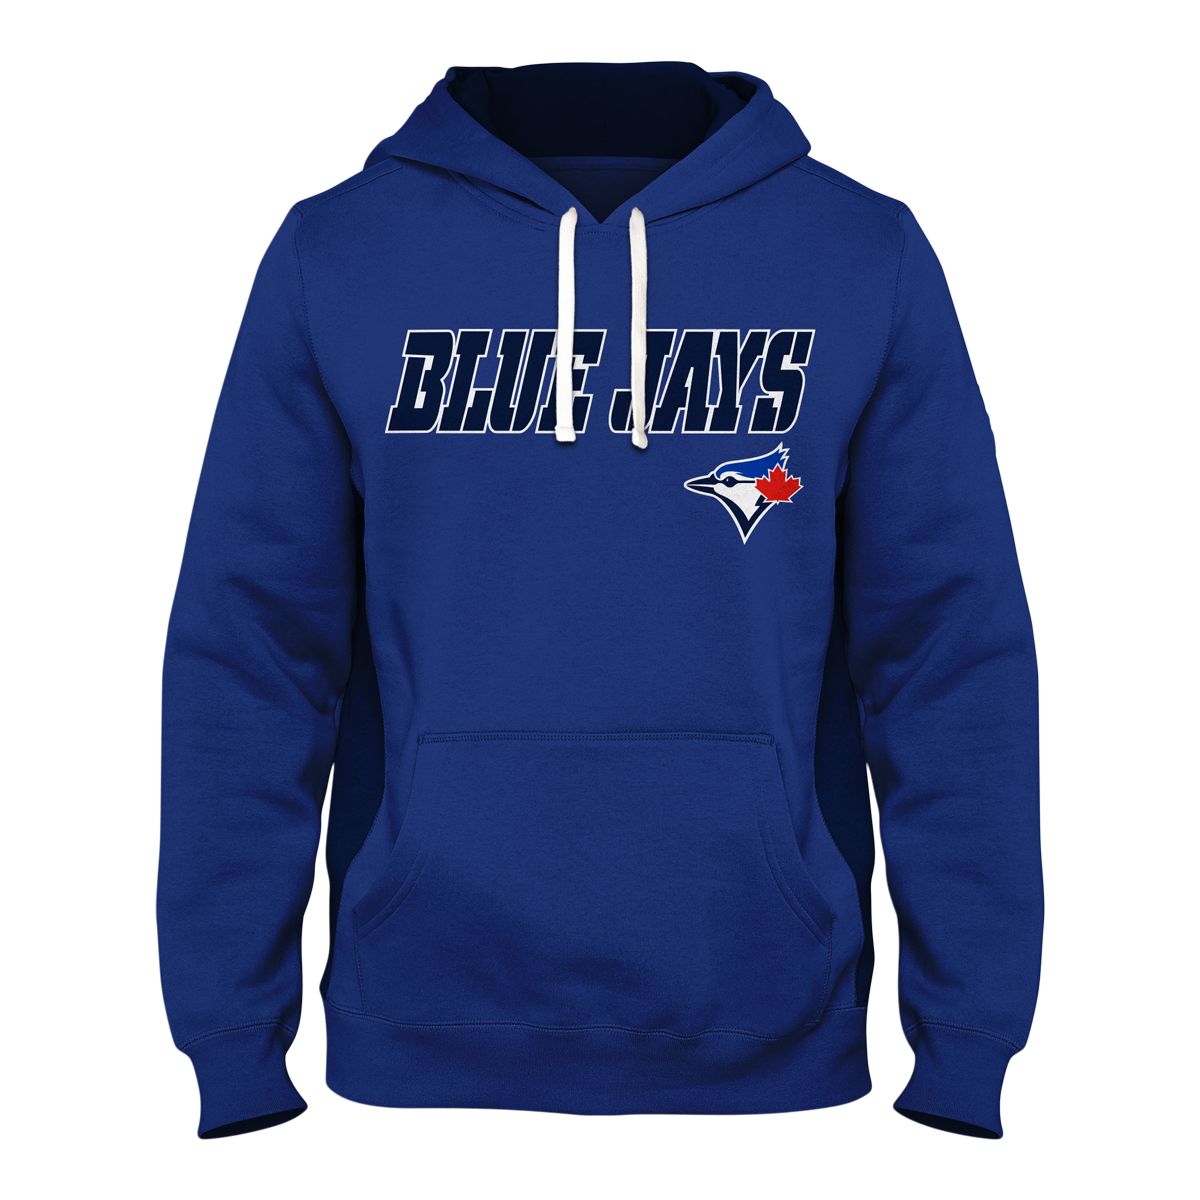 MLB Toronto Blue Jays Youth Kids' Cotton Blend Fleece Hoodie Sweatshirt,  Blue, Assorted Sizes